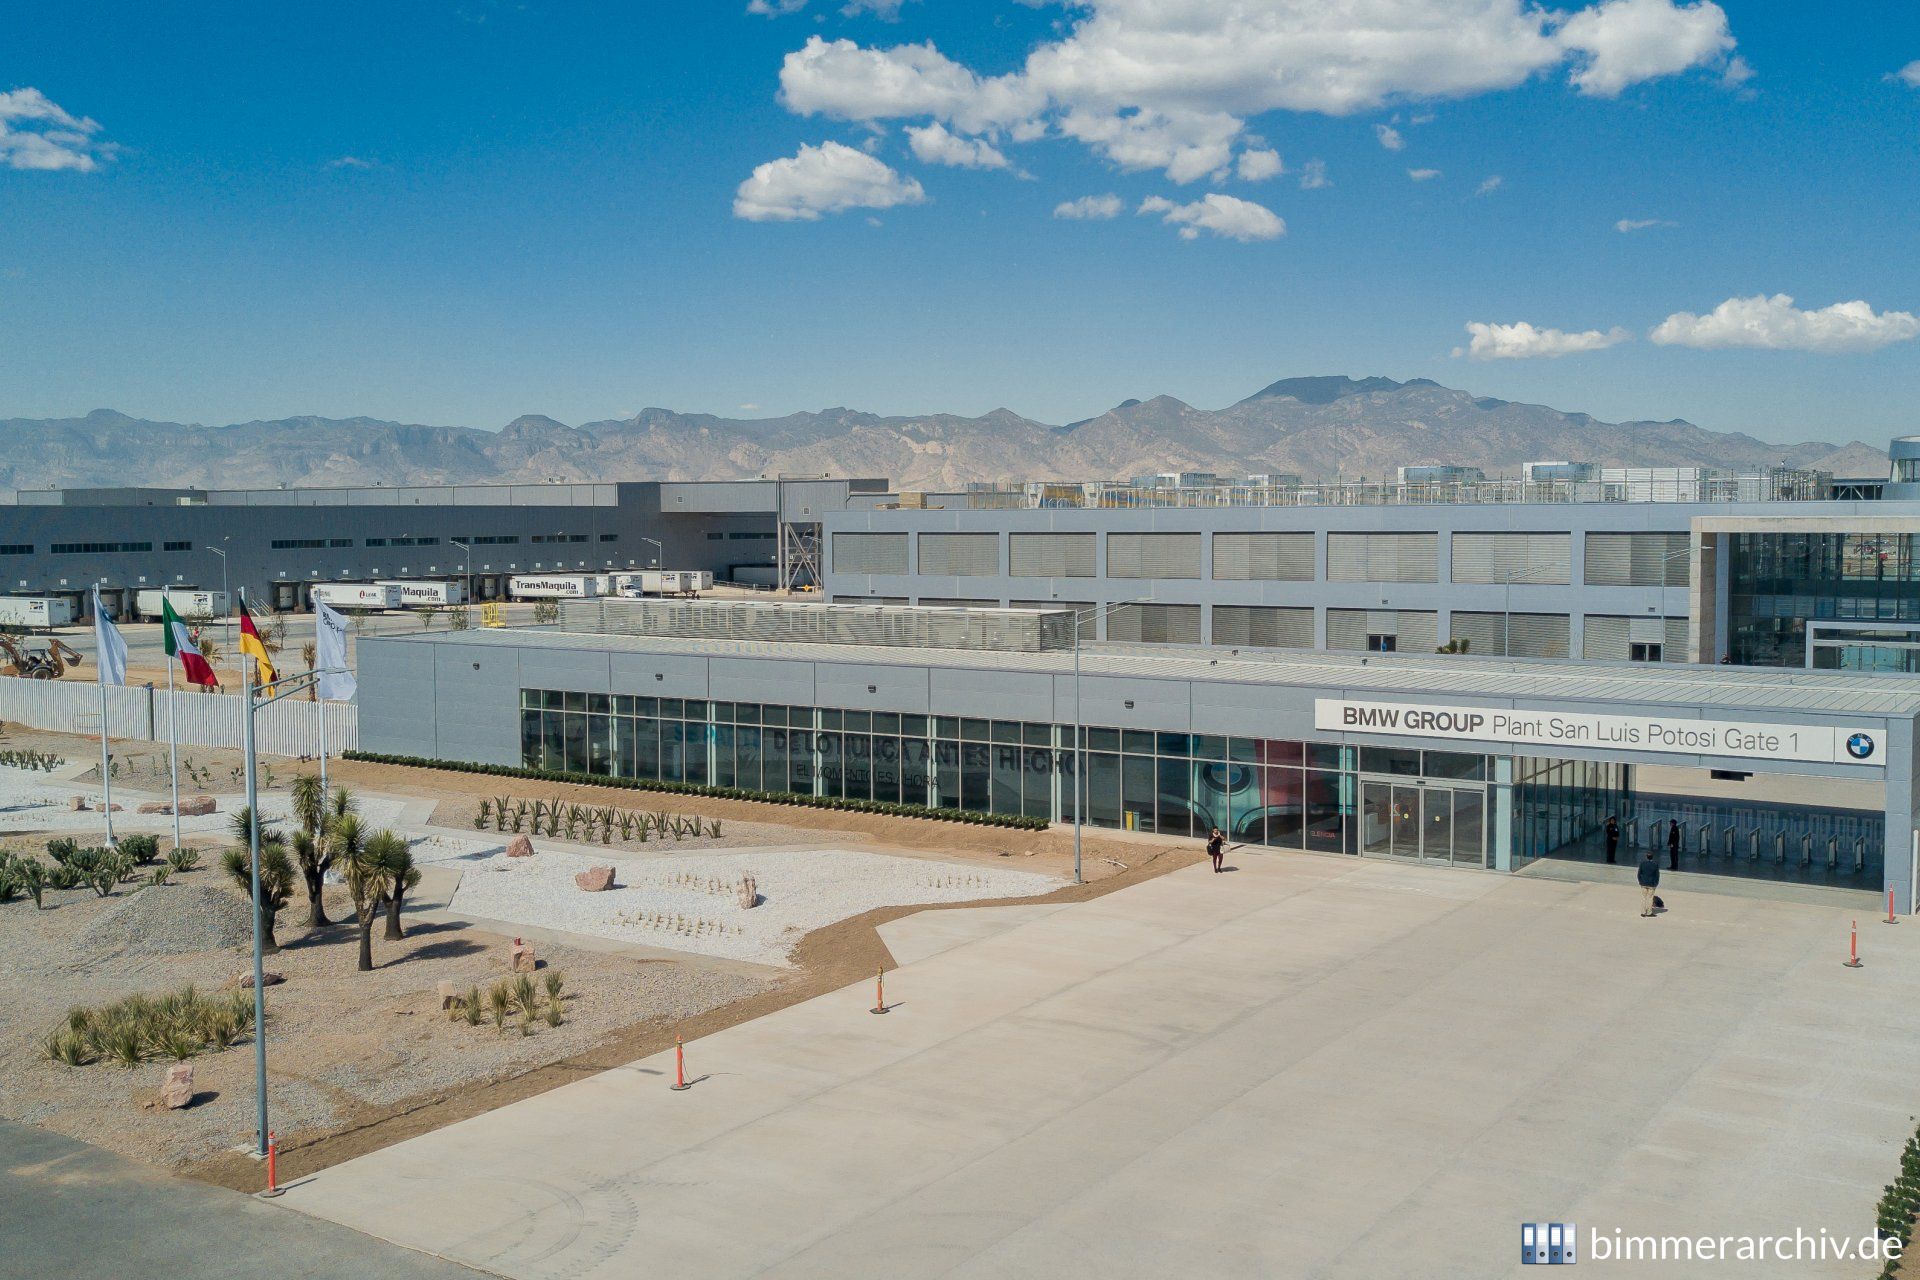 BMW Group Plant San Luis Potosí, Mexico